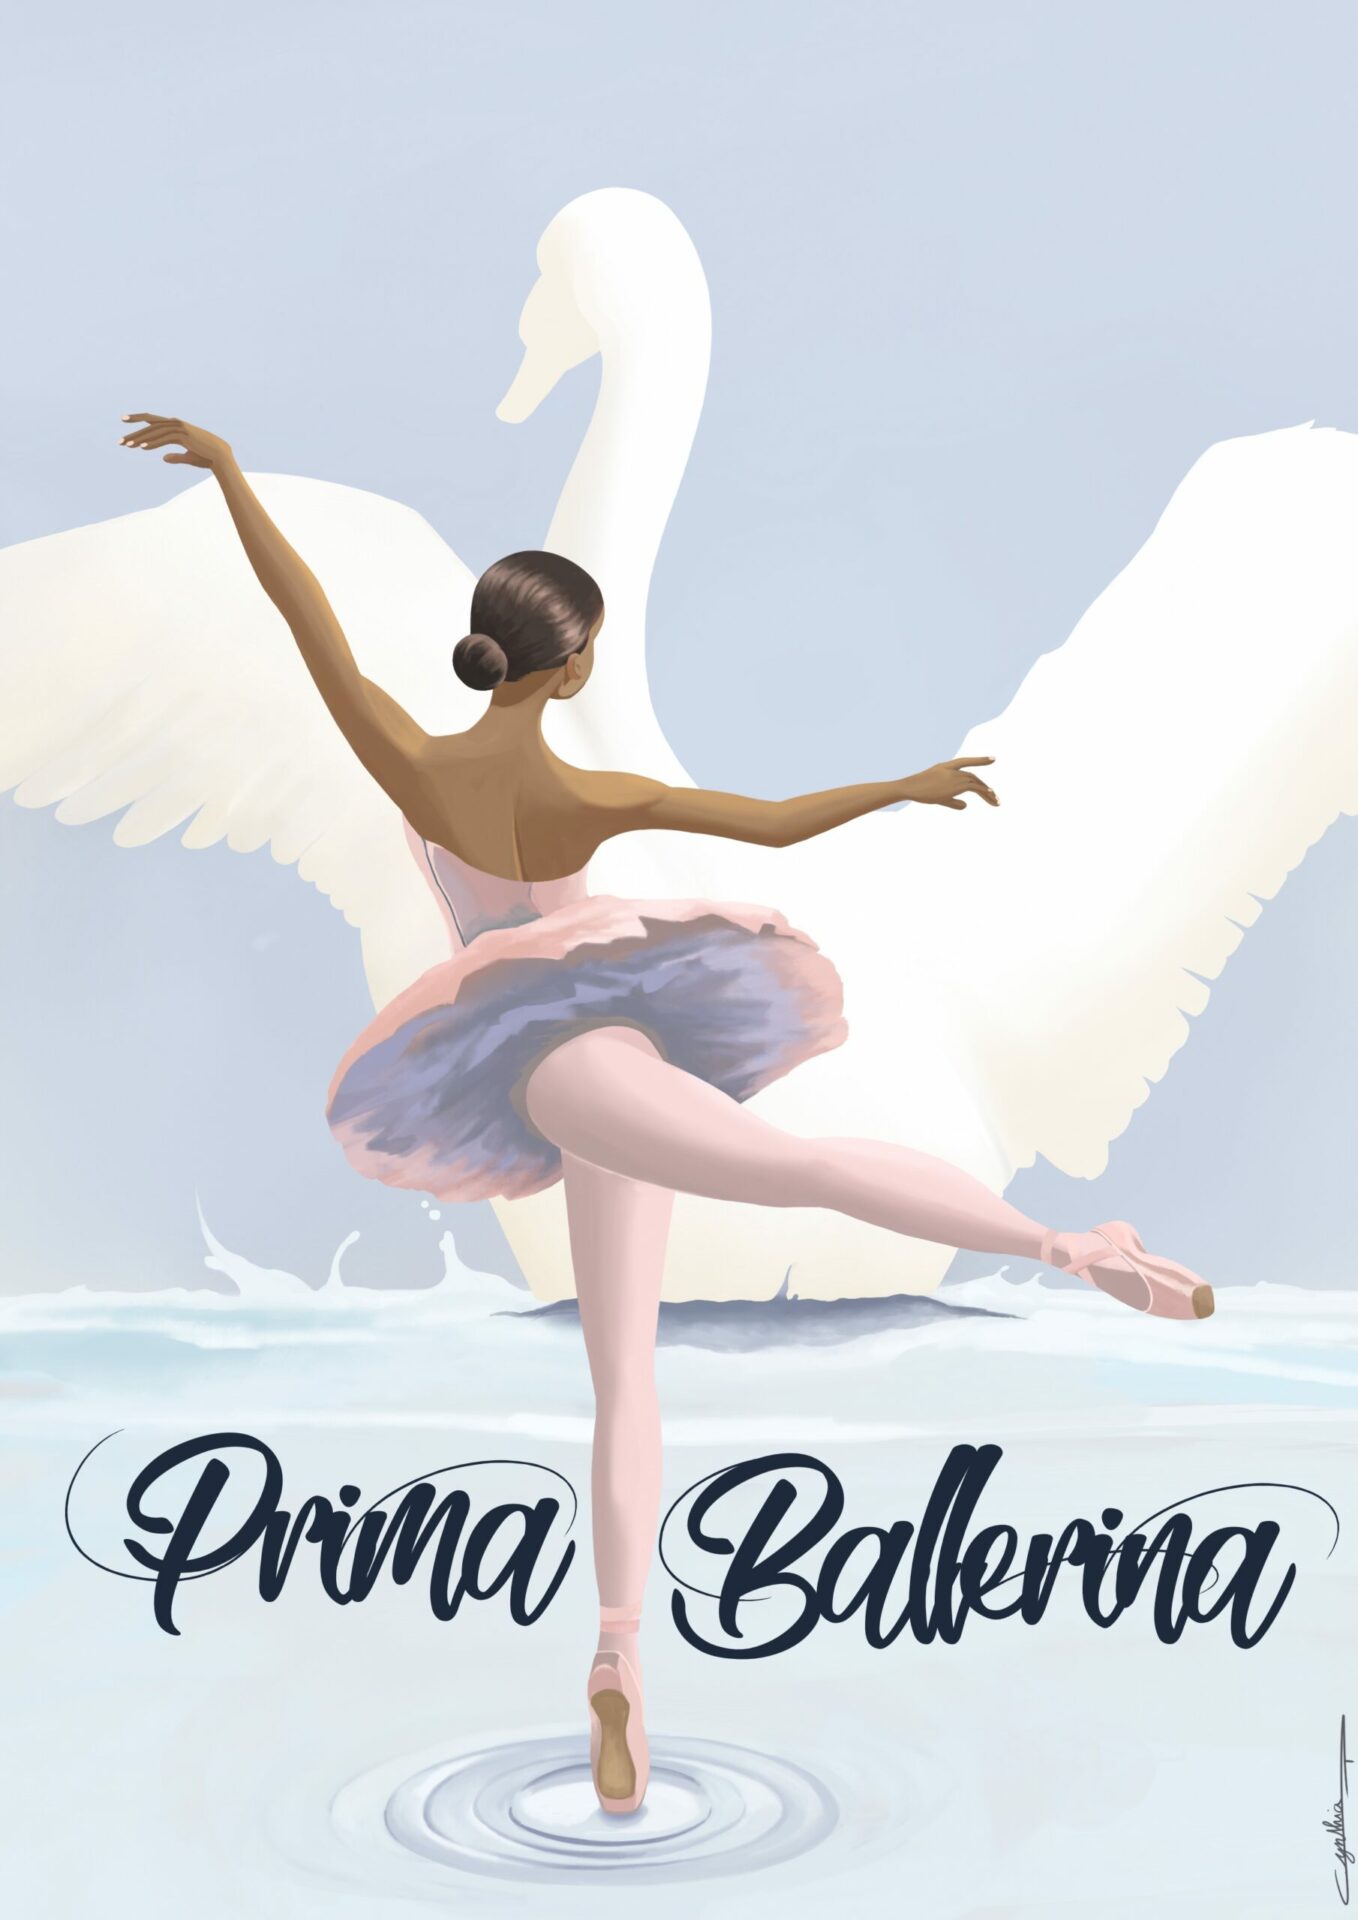 Teen book cover illustration, ballerina by Cynthia Artstudio